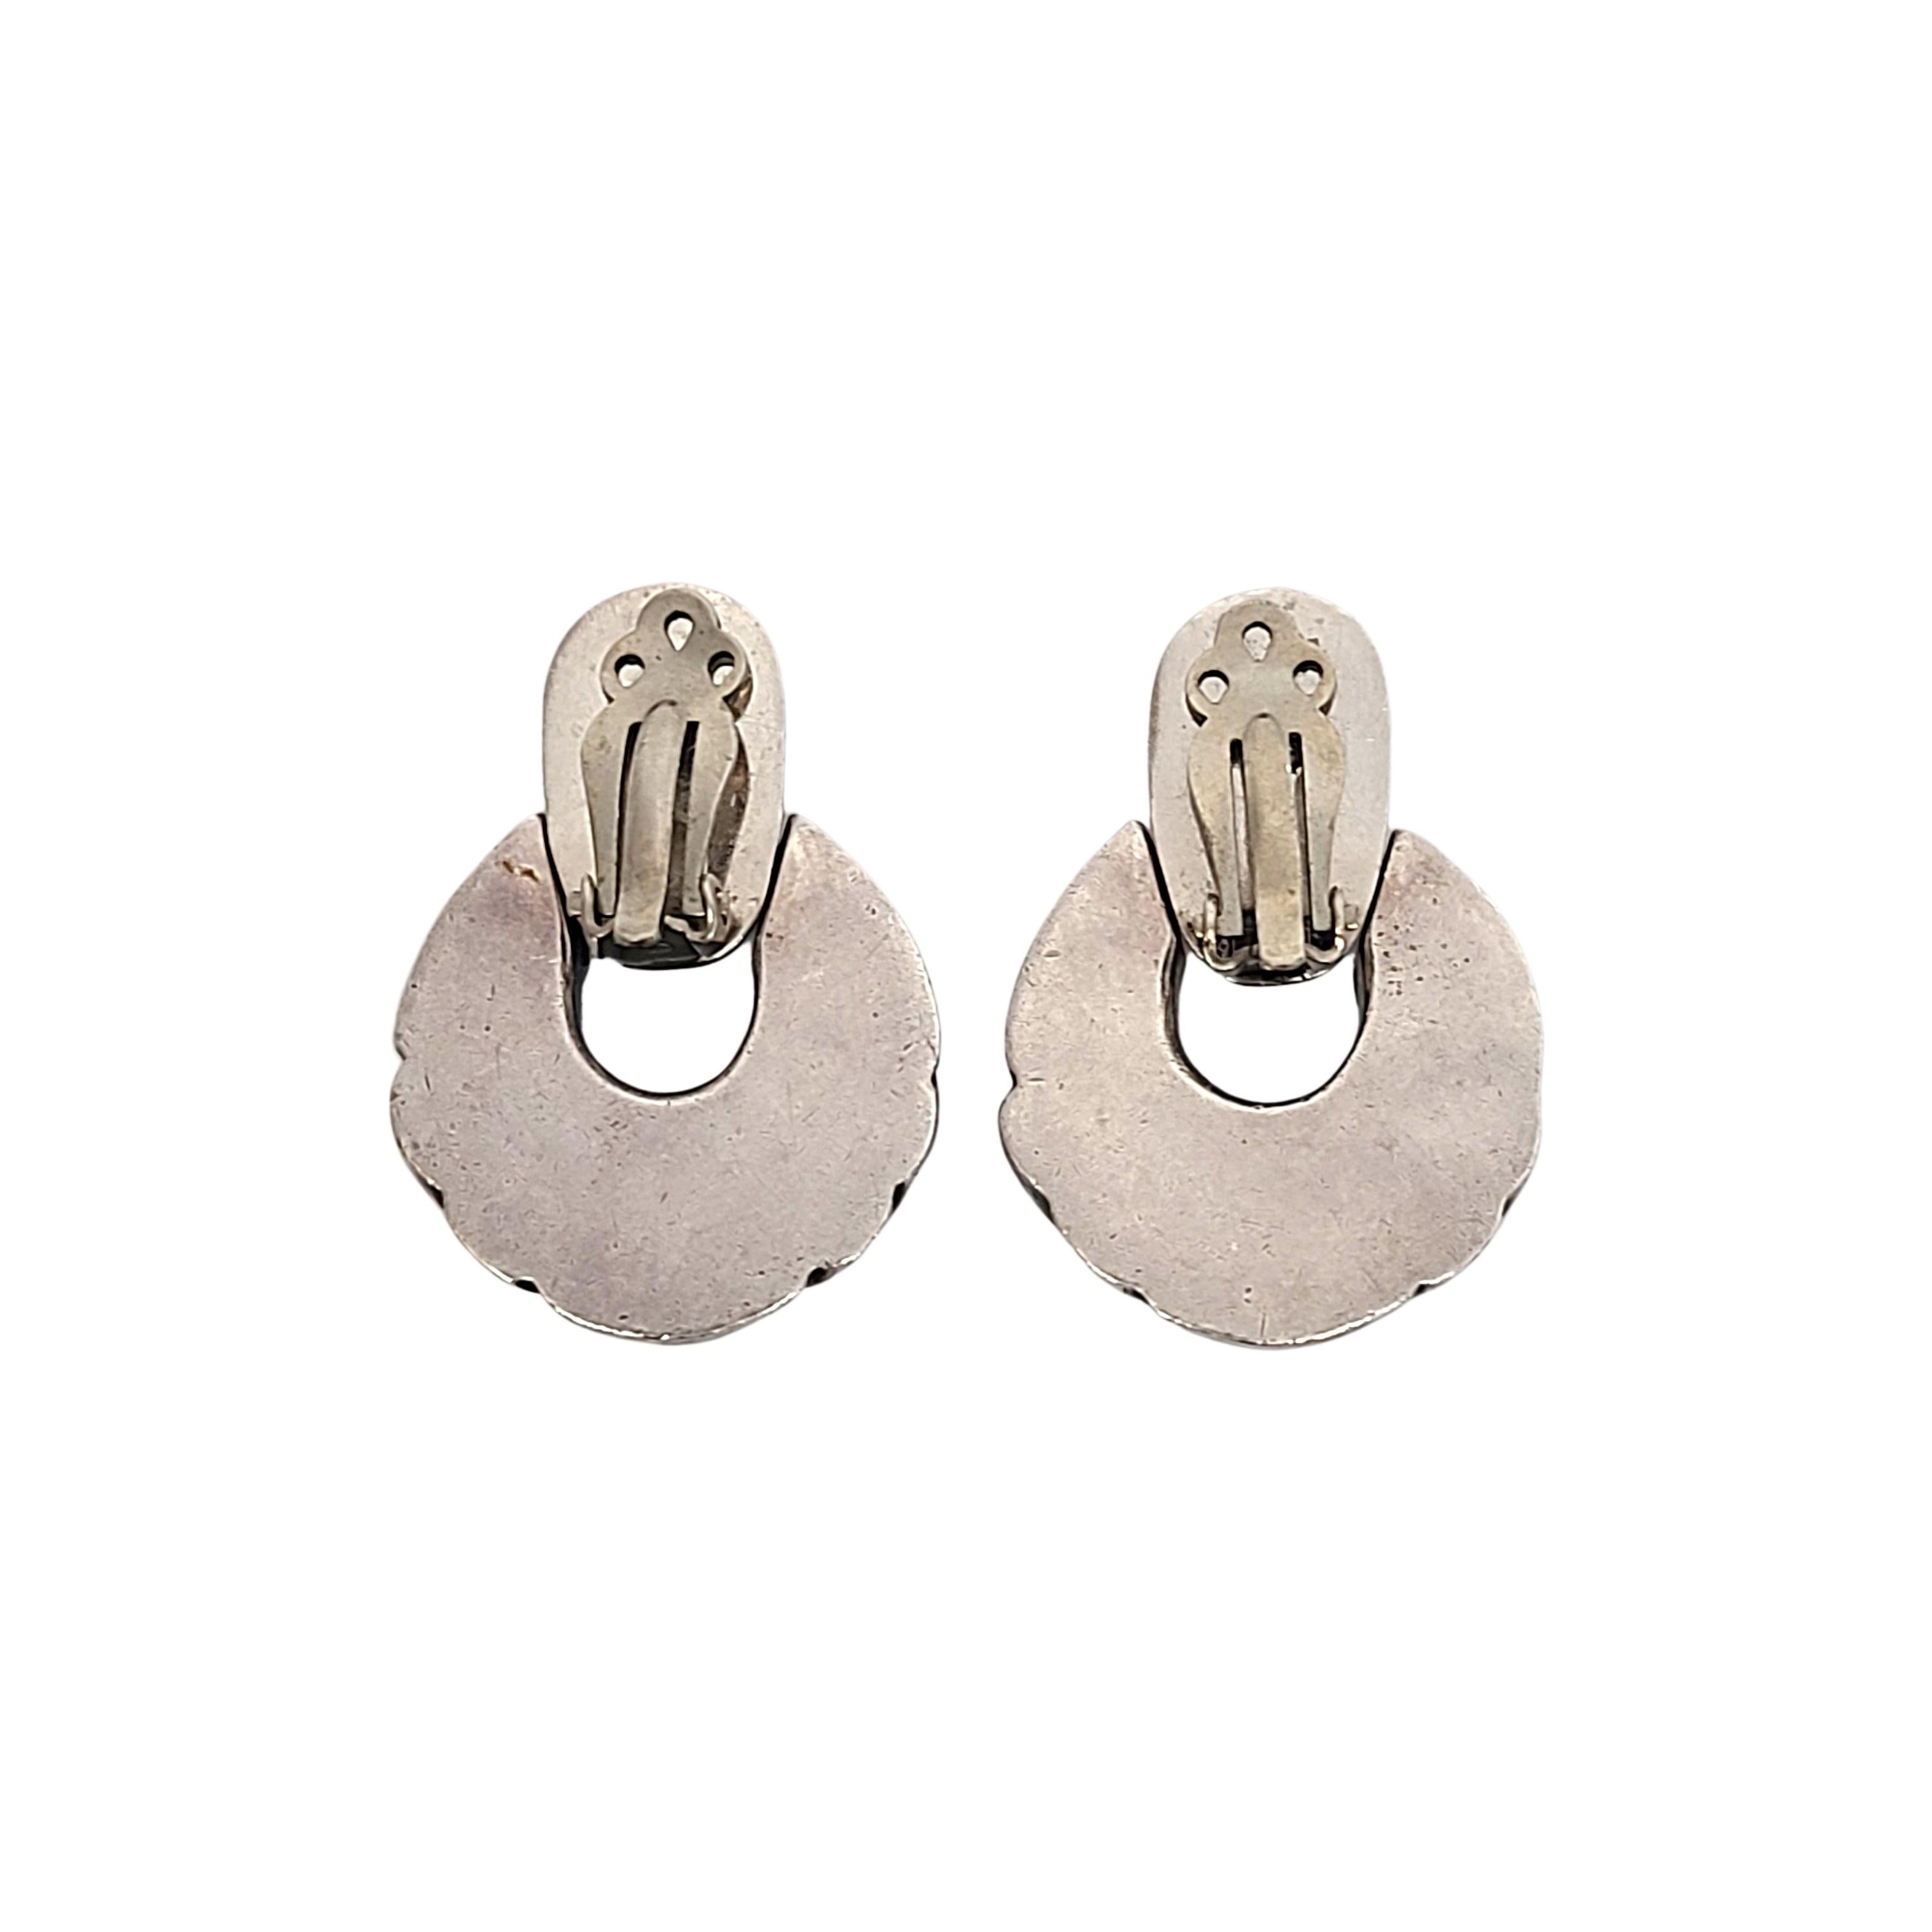 Sterling silver clip-on door knocker earrings by Zina.

Large and substantial door knocker design earrings.

Measures approx 1 1/4